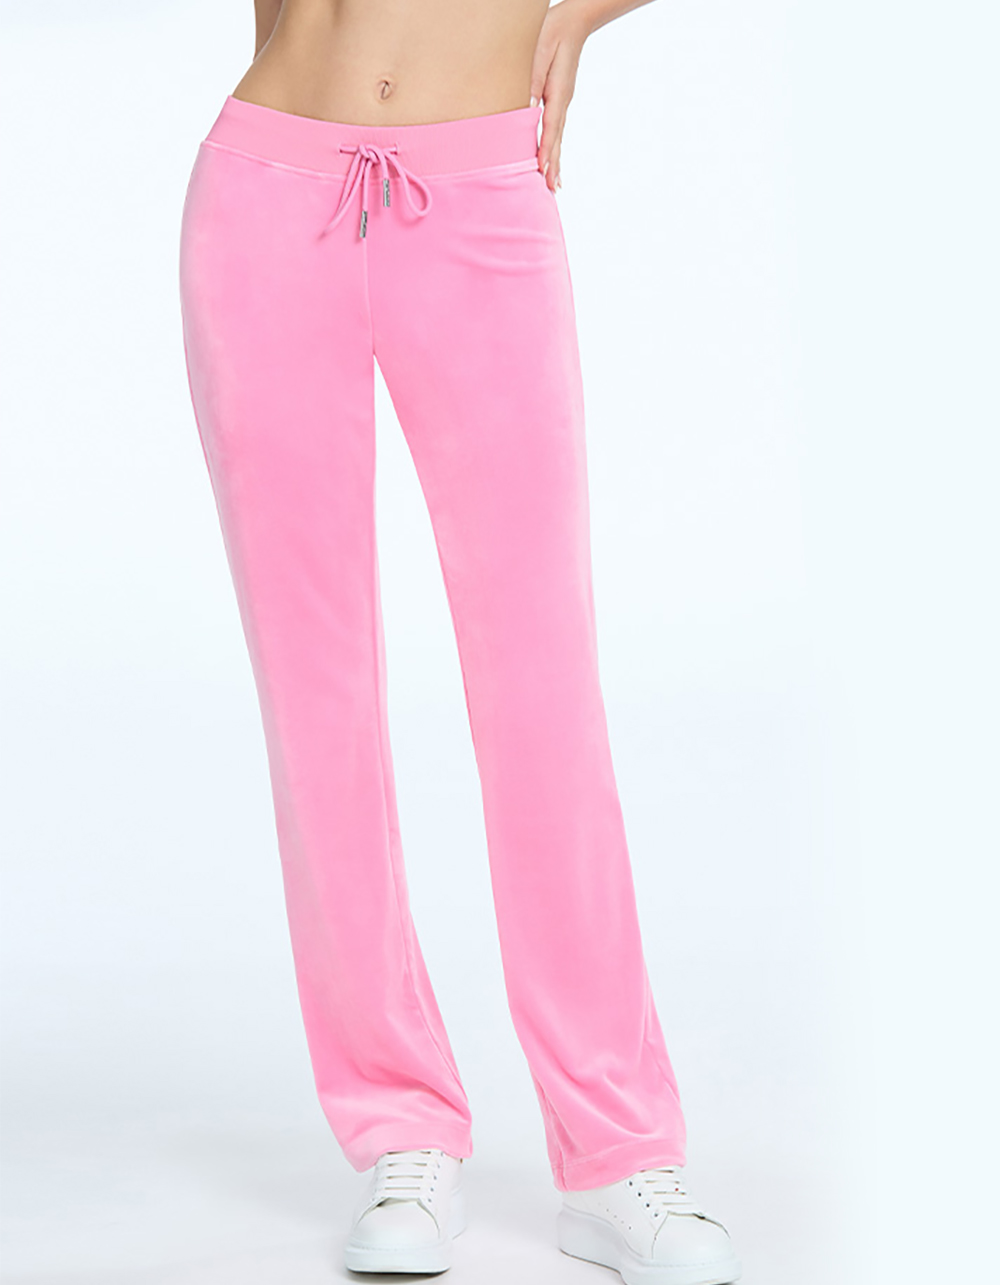 Juicy Couture Tracksuit Set Hot Pink Jacket Pants Snap On Back Pockets  Medium